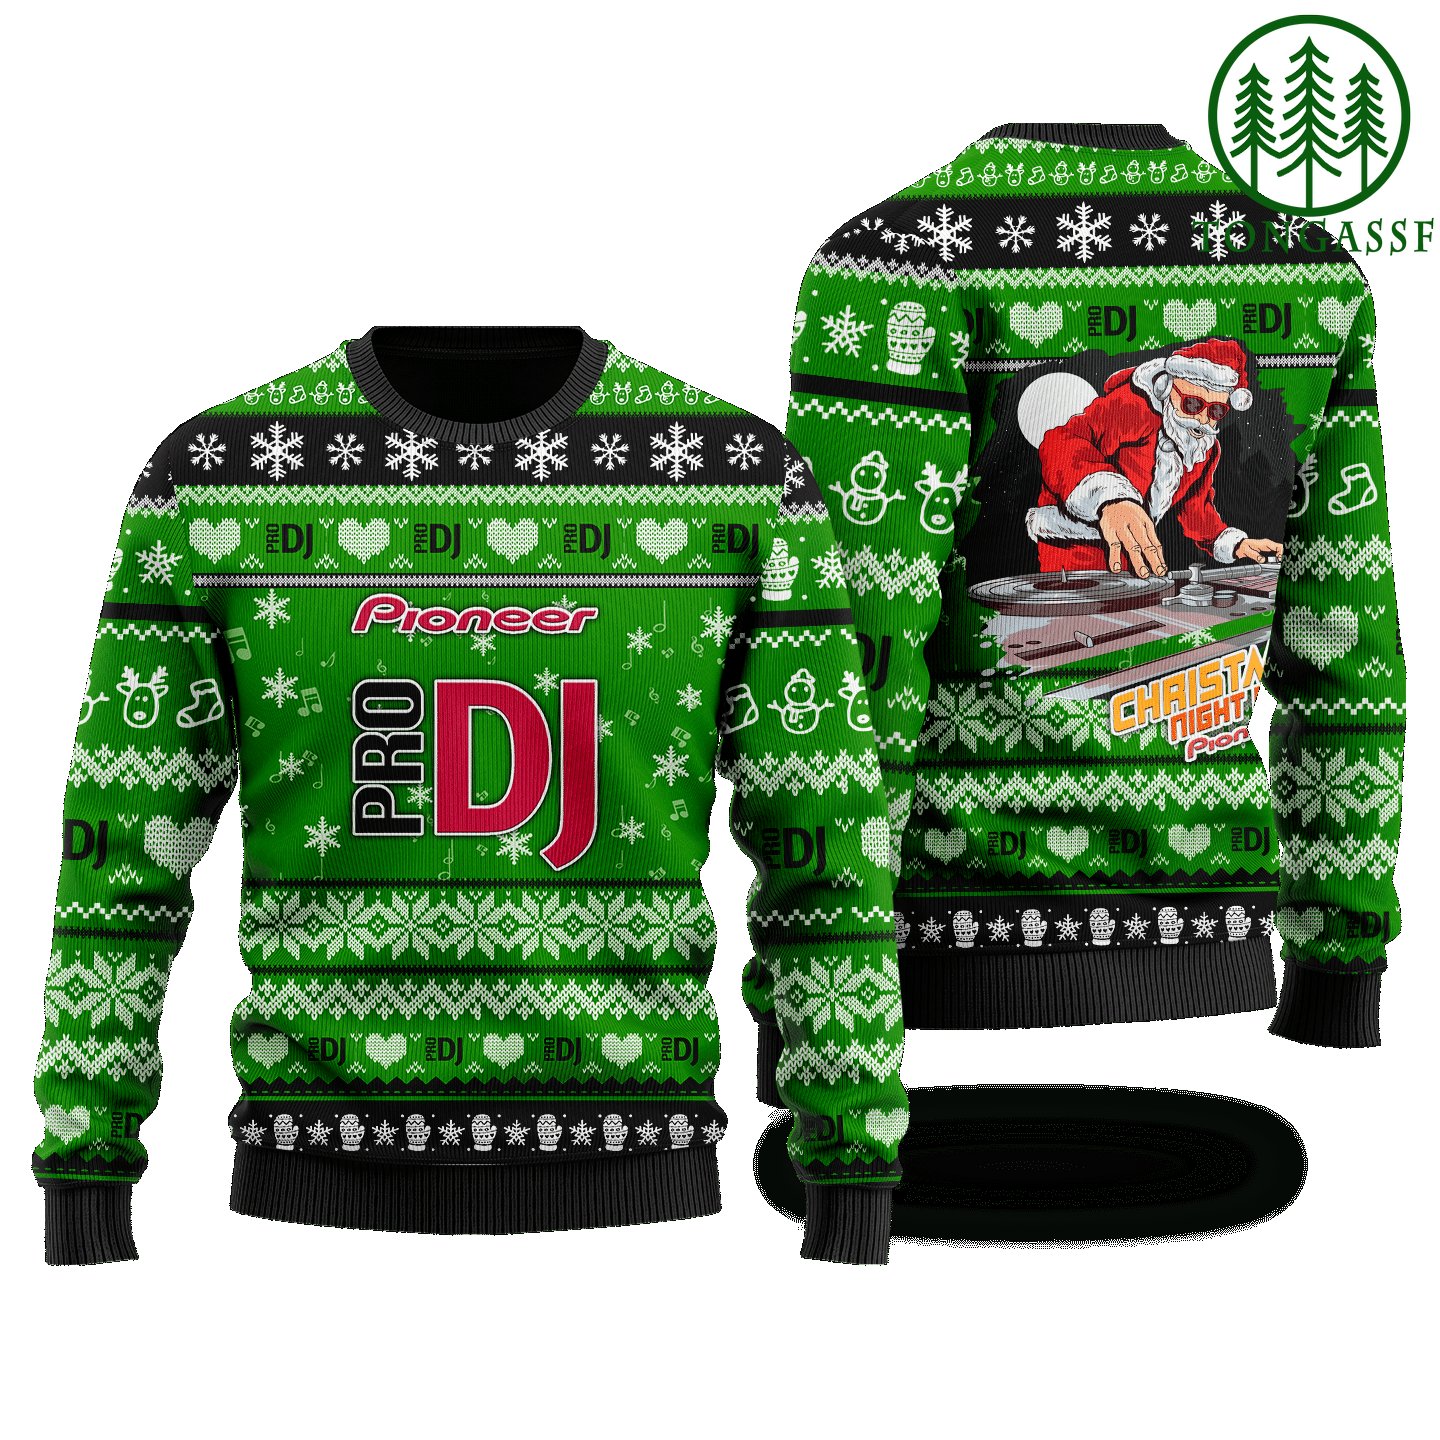 PRO Pioneer DJ Christmas Green Ugly Sweater